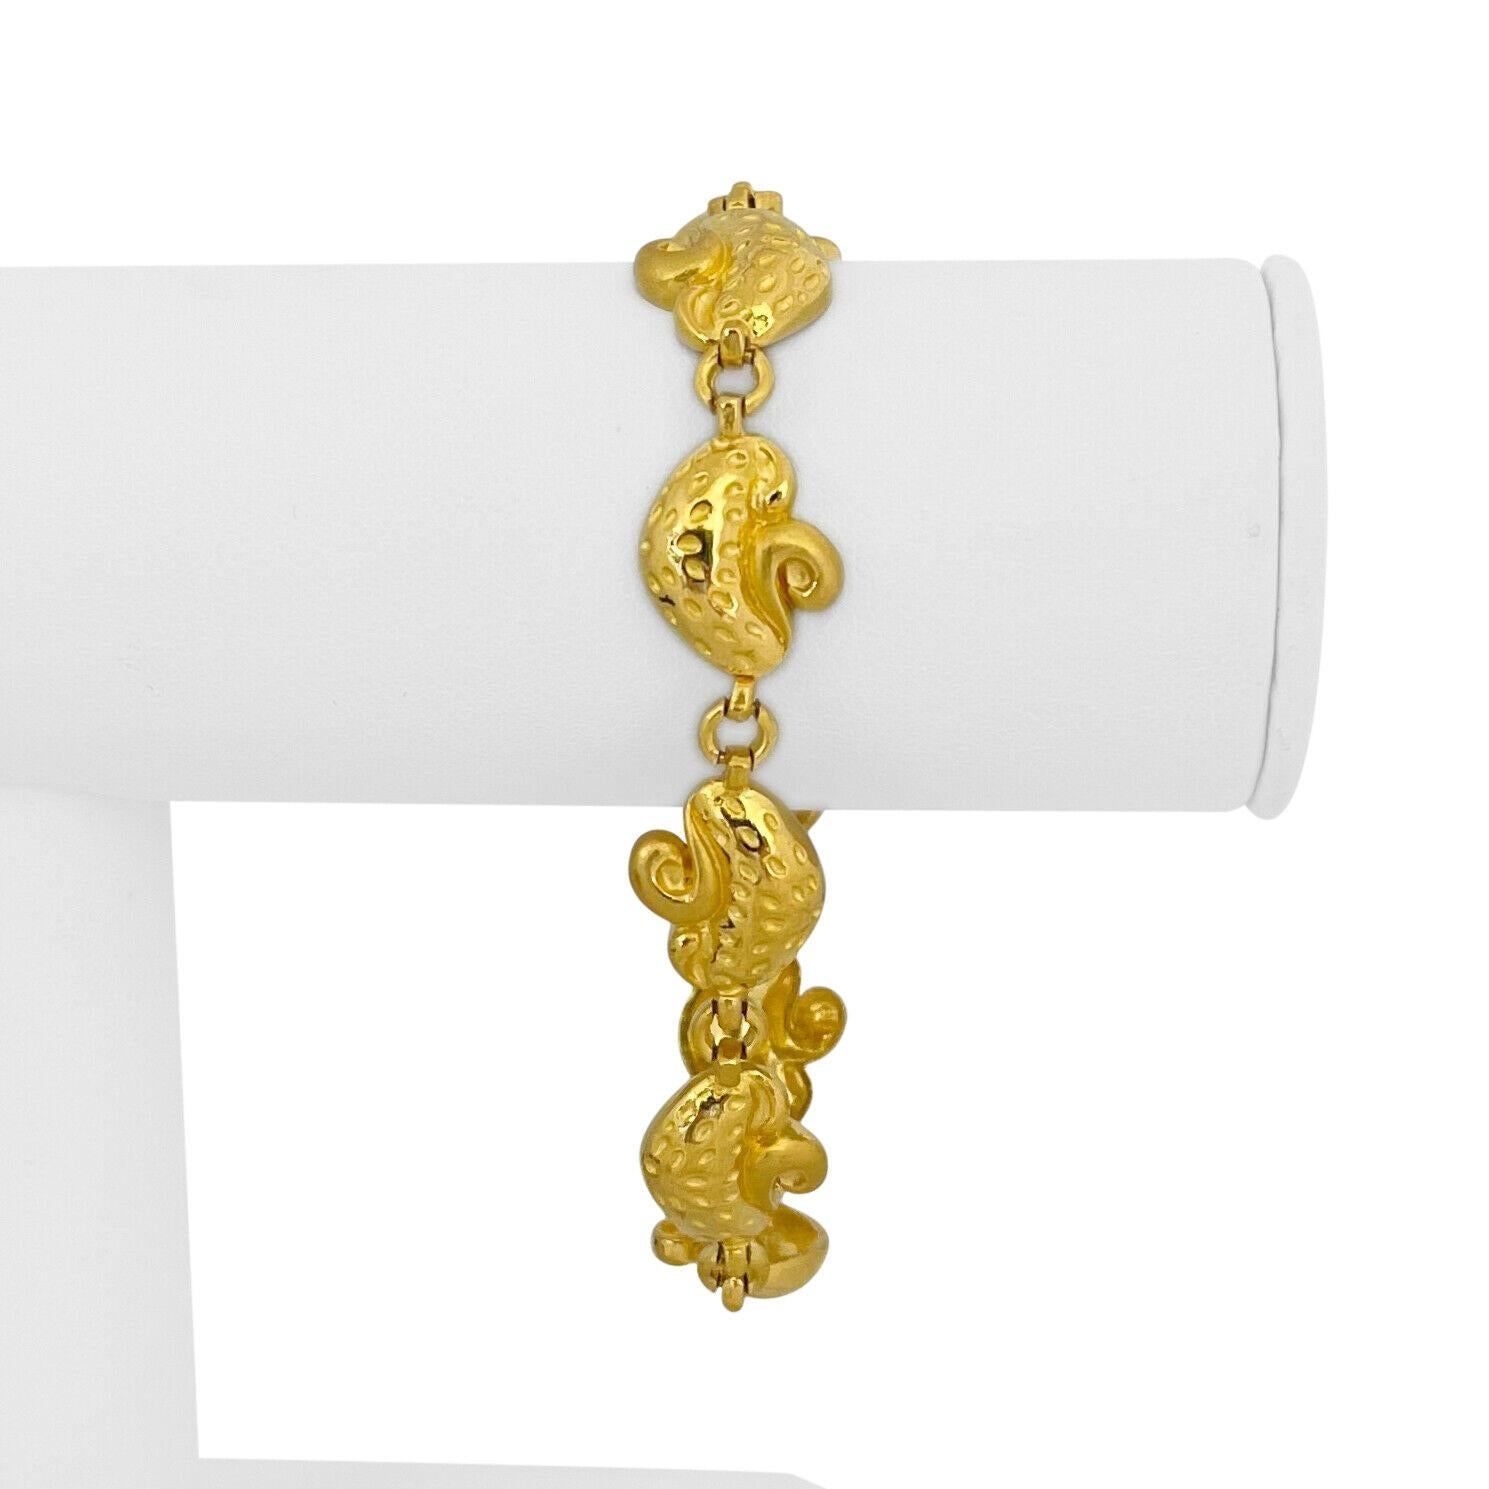 Bracelet en or jaune pur 24k 43.4g massif lourd 13mm Fancy Link Bracelet 8